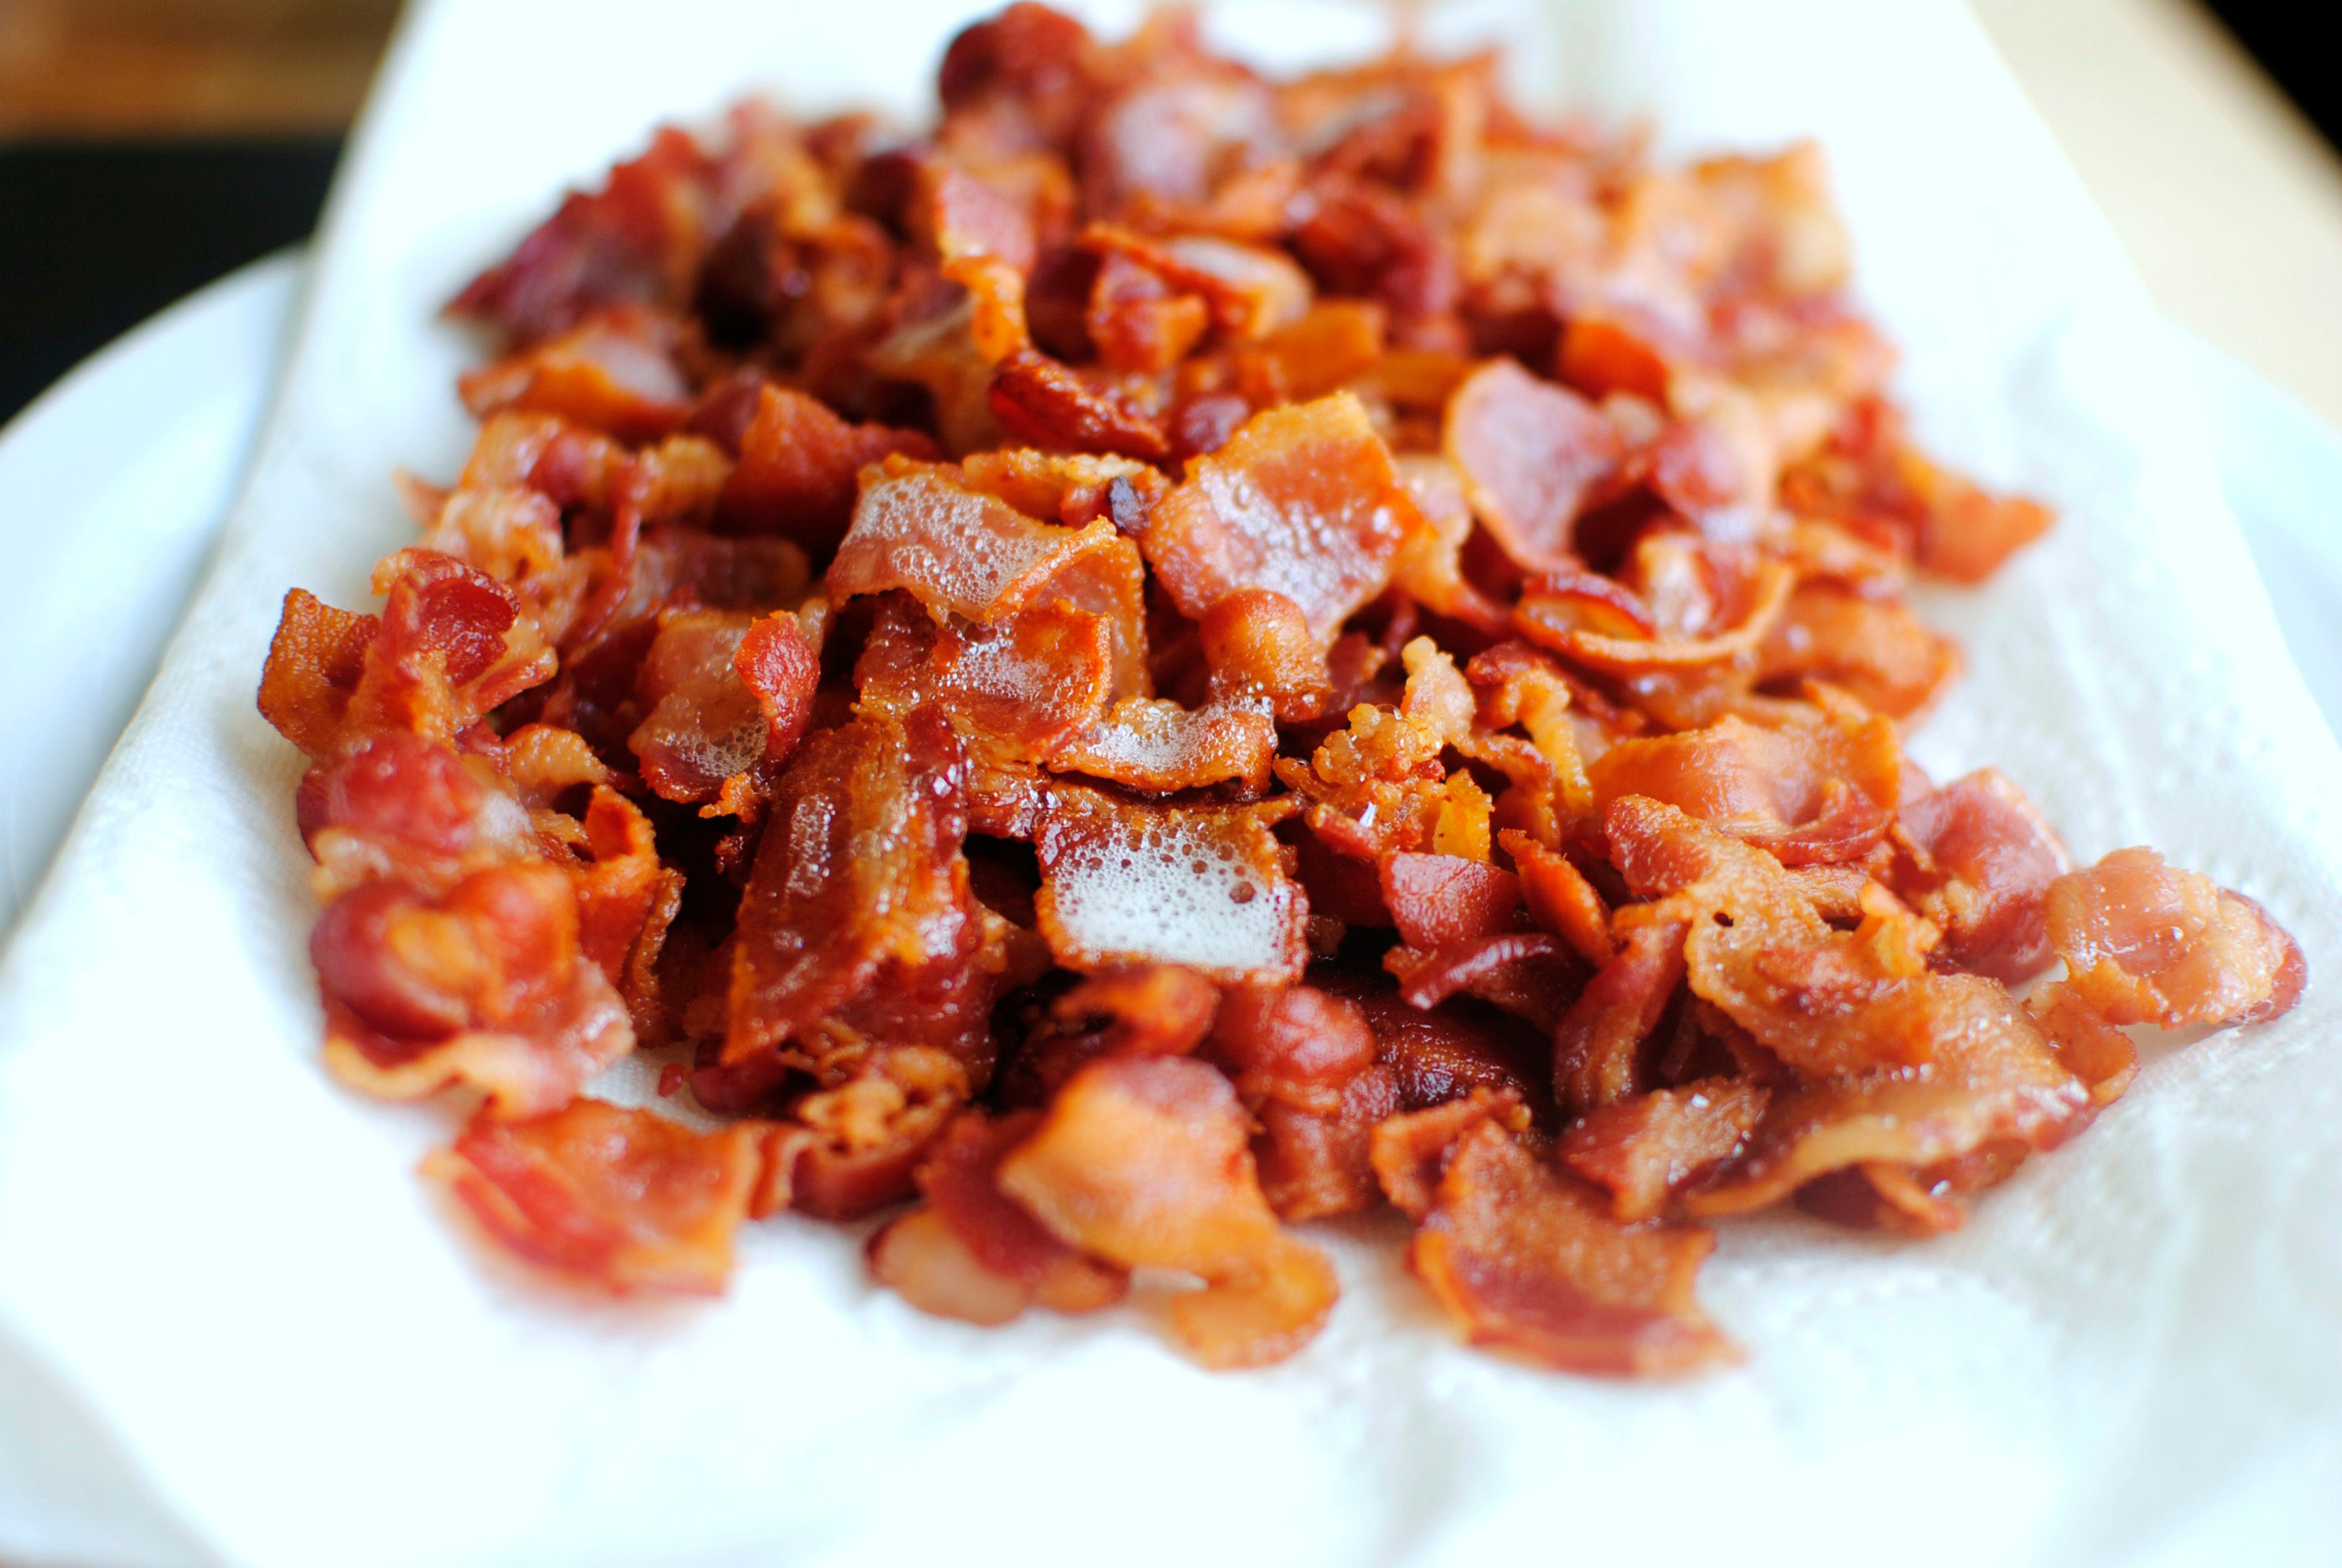 How do you prepare bacon jelly?